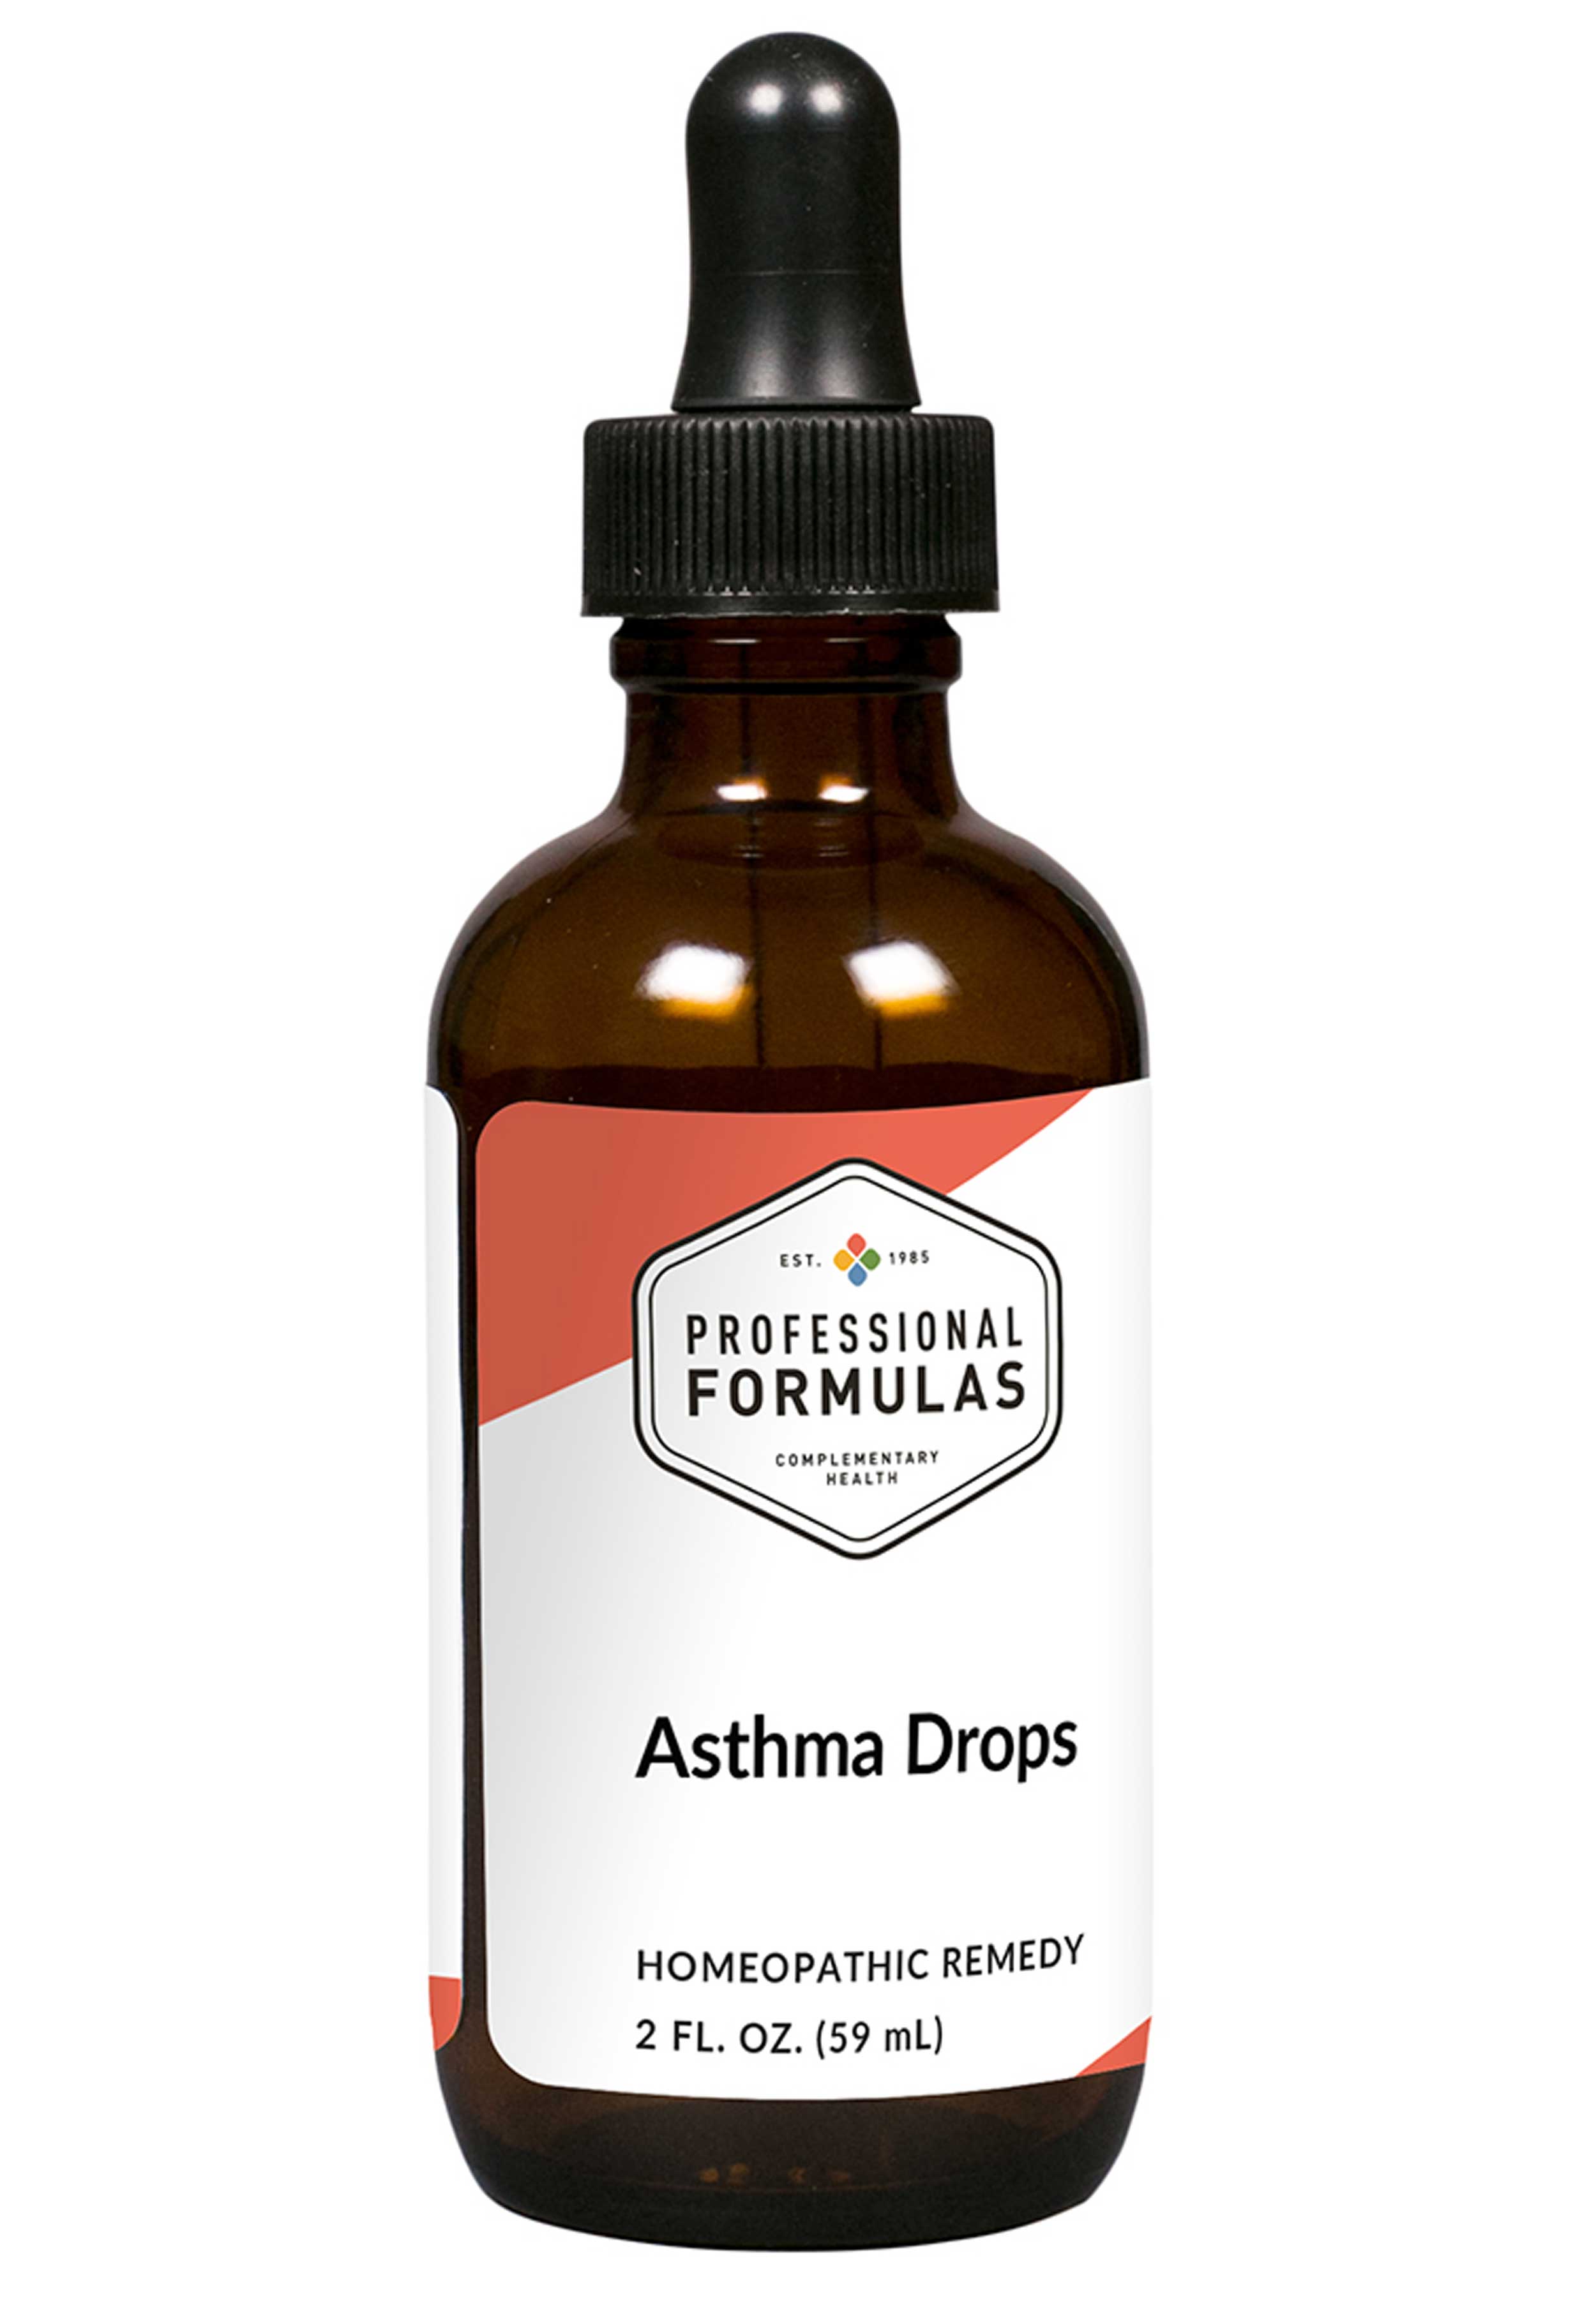 Professional Formulas Asthma Drops